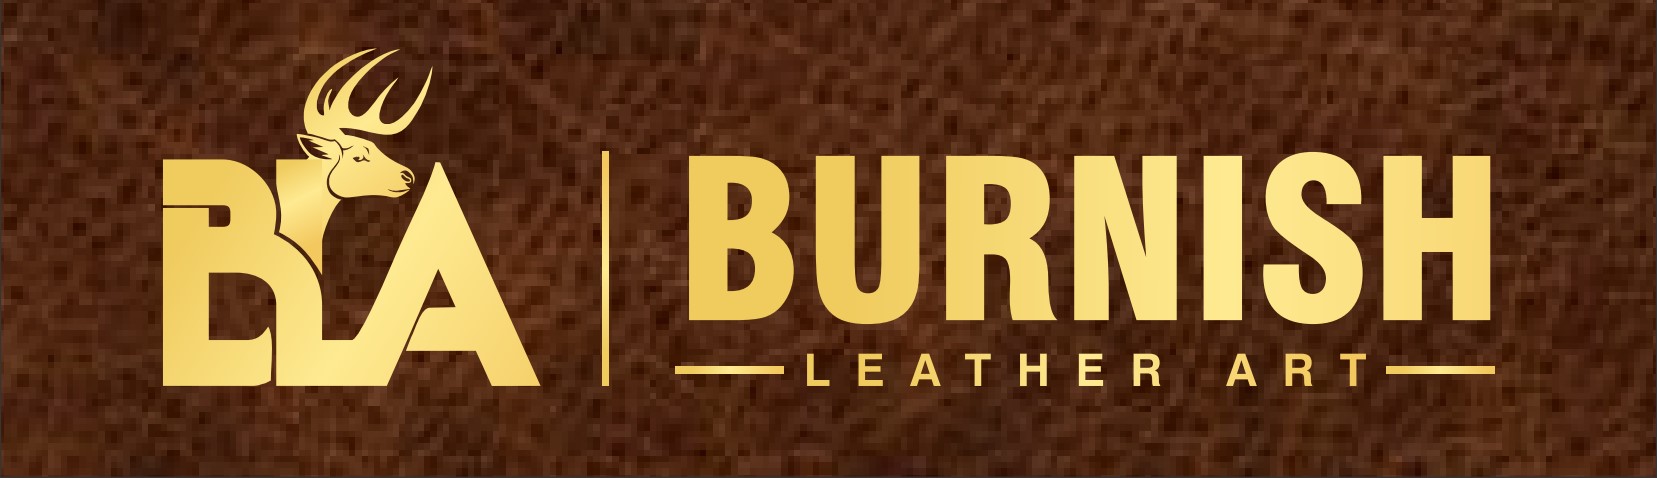 burnish-leather-art